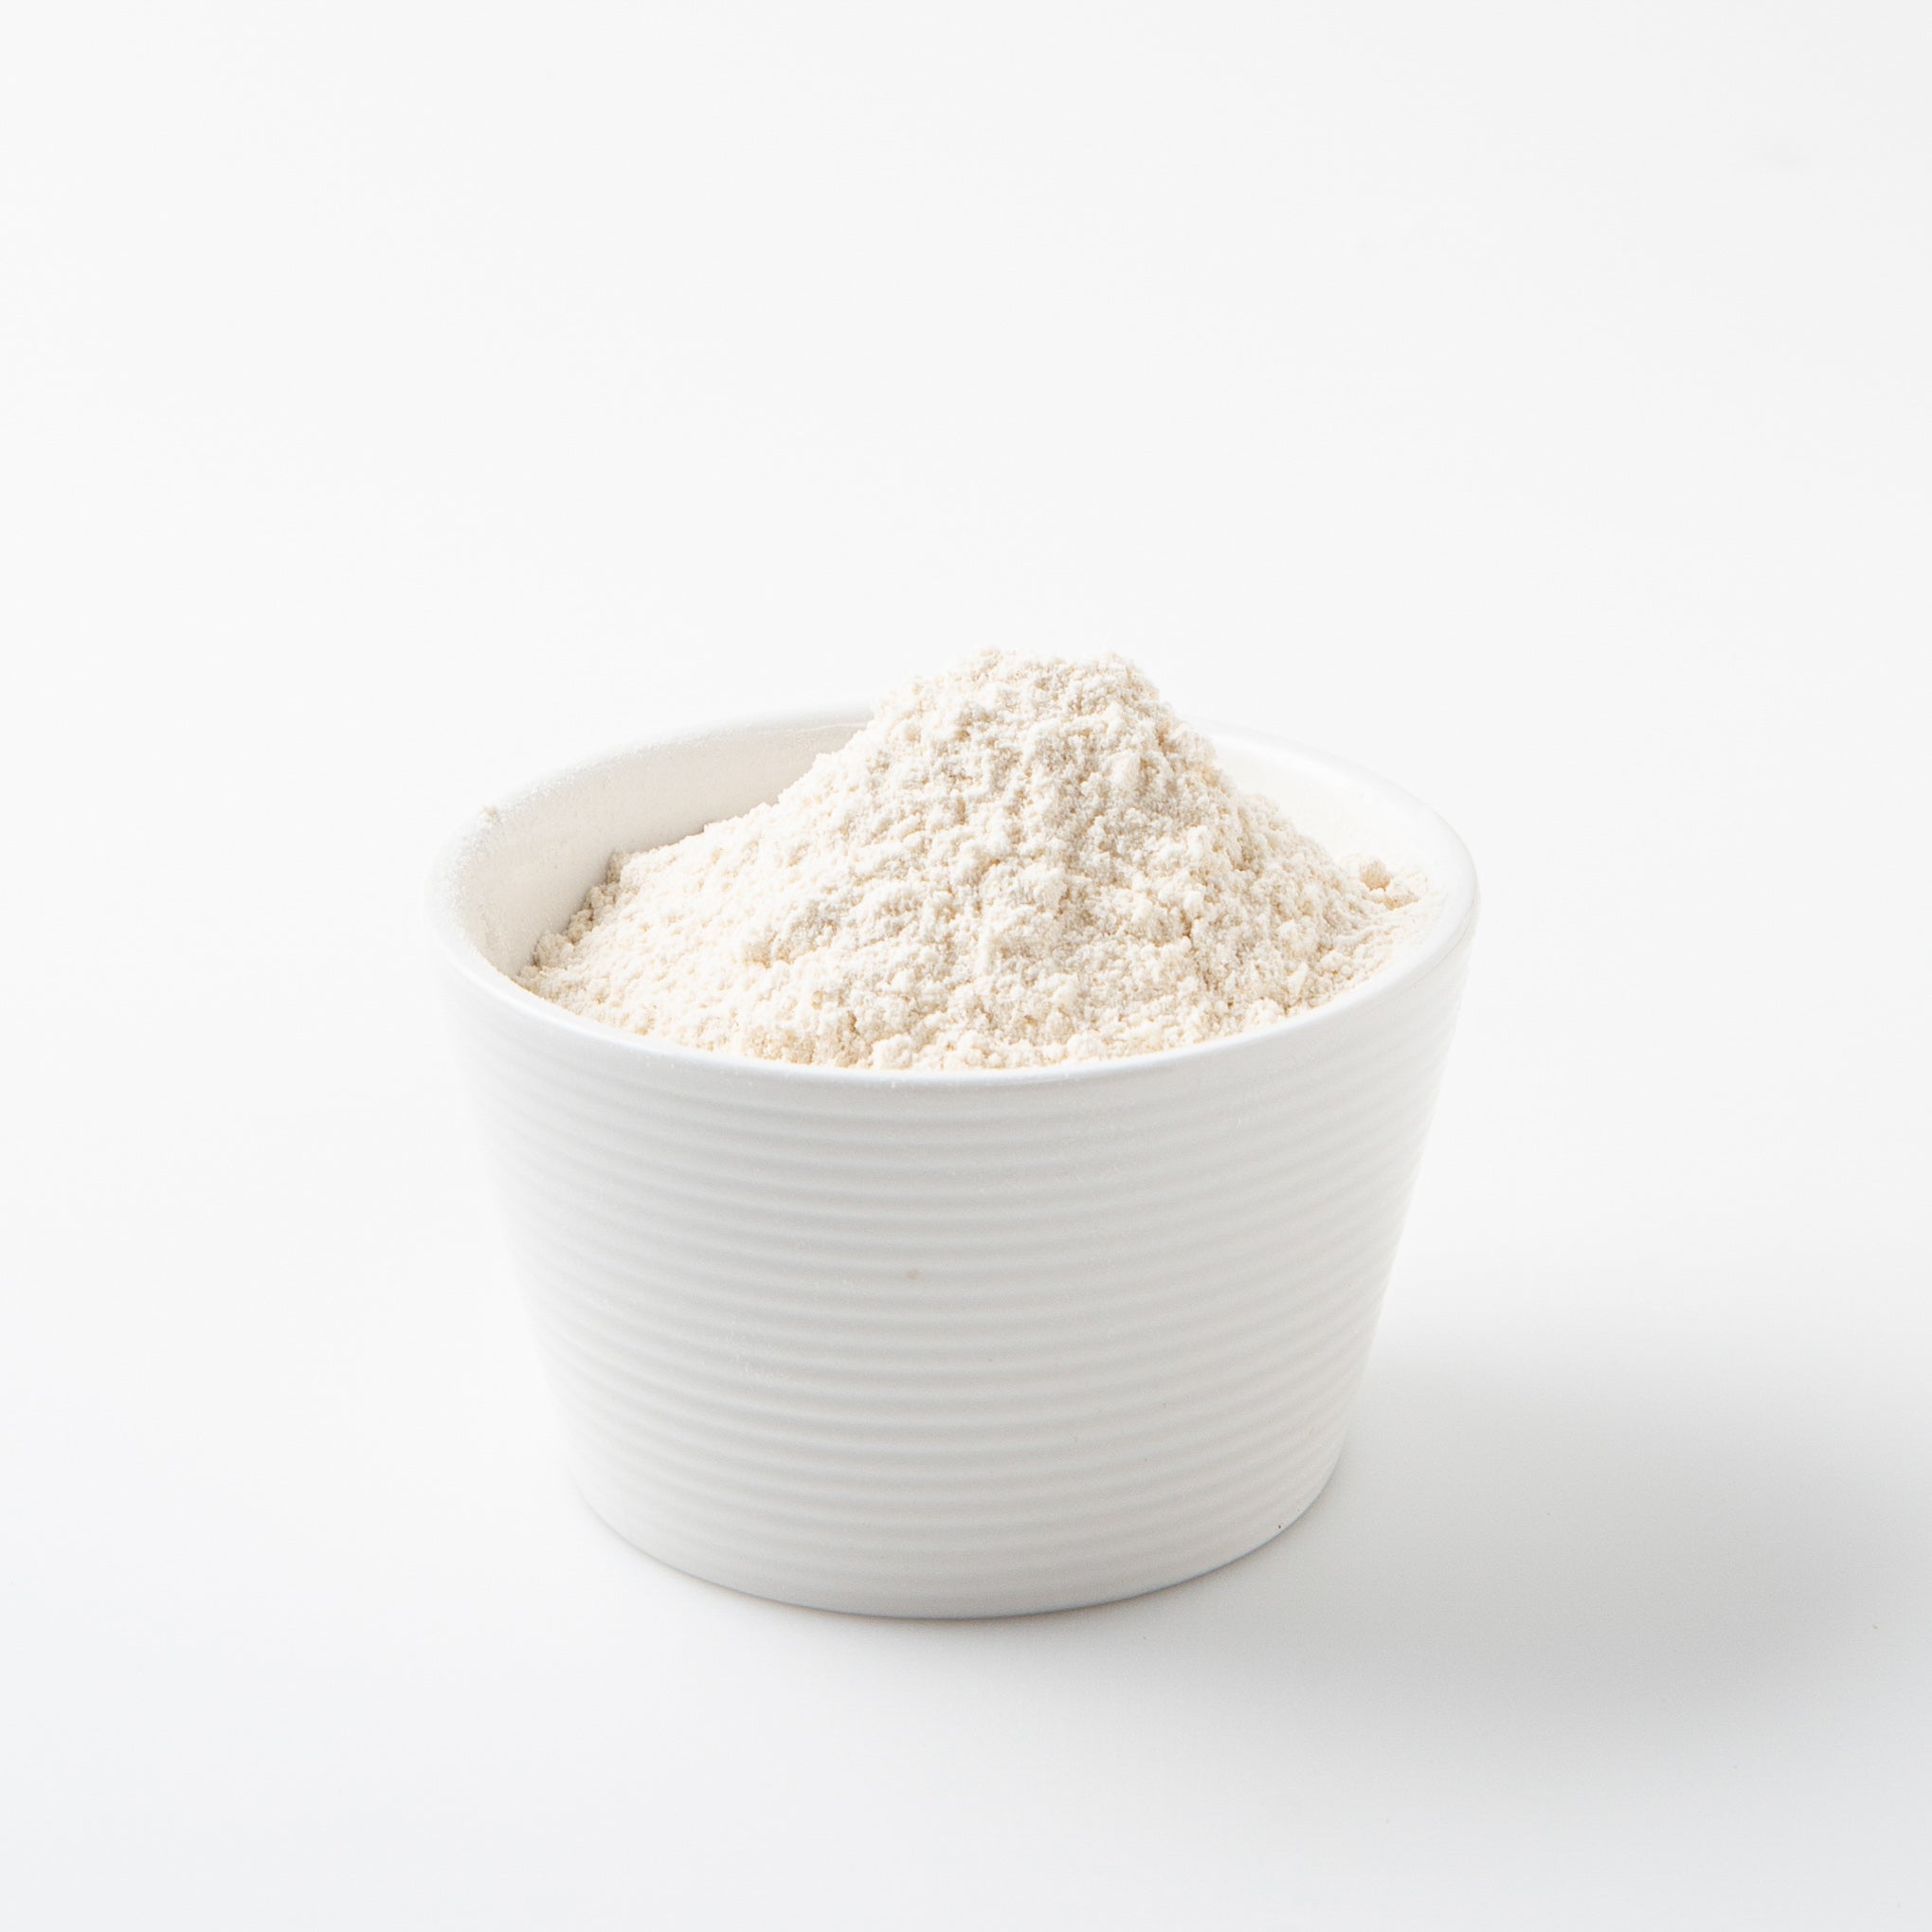 Organic White Bakers Flour (Flour) Image 1 - Naked Foods